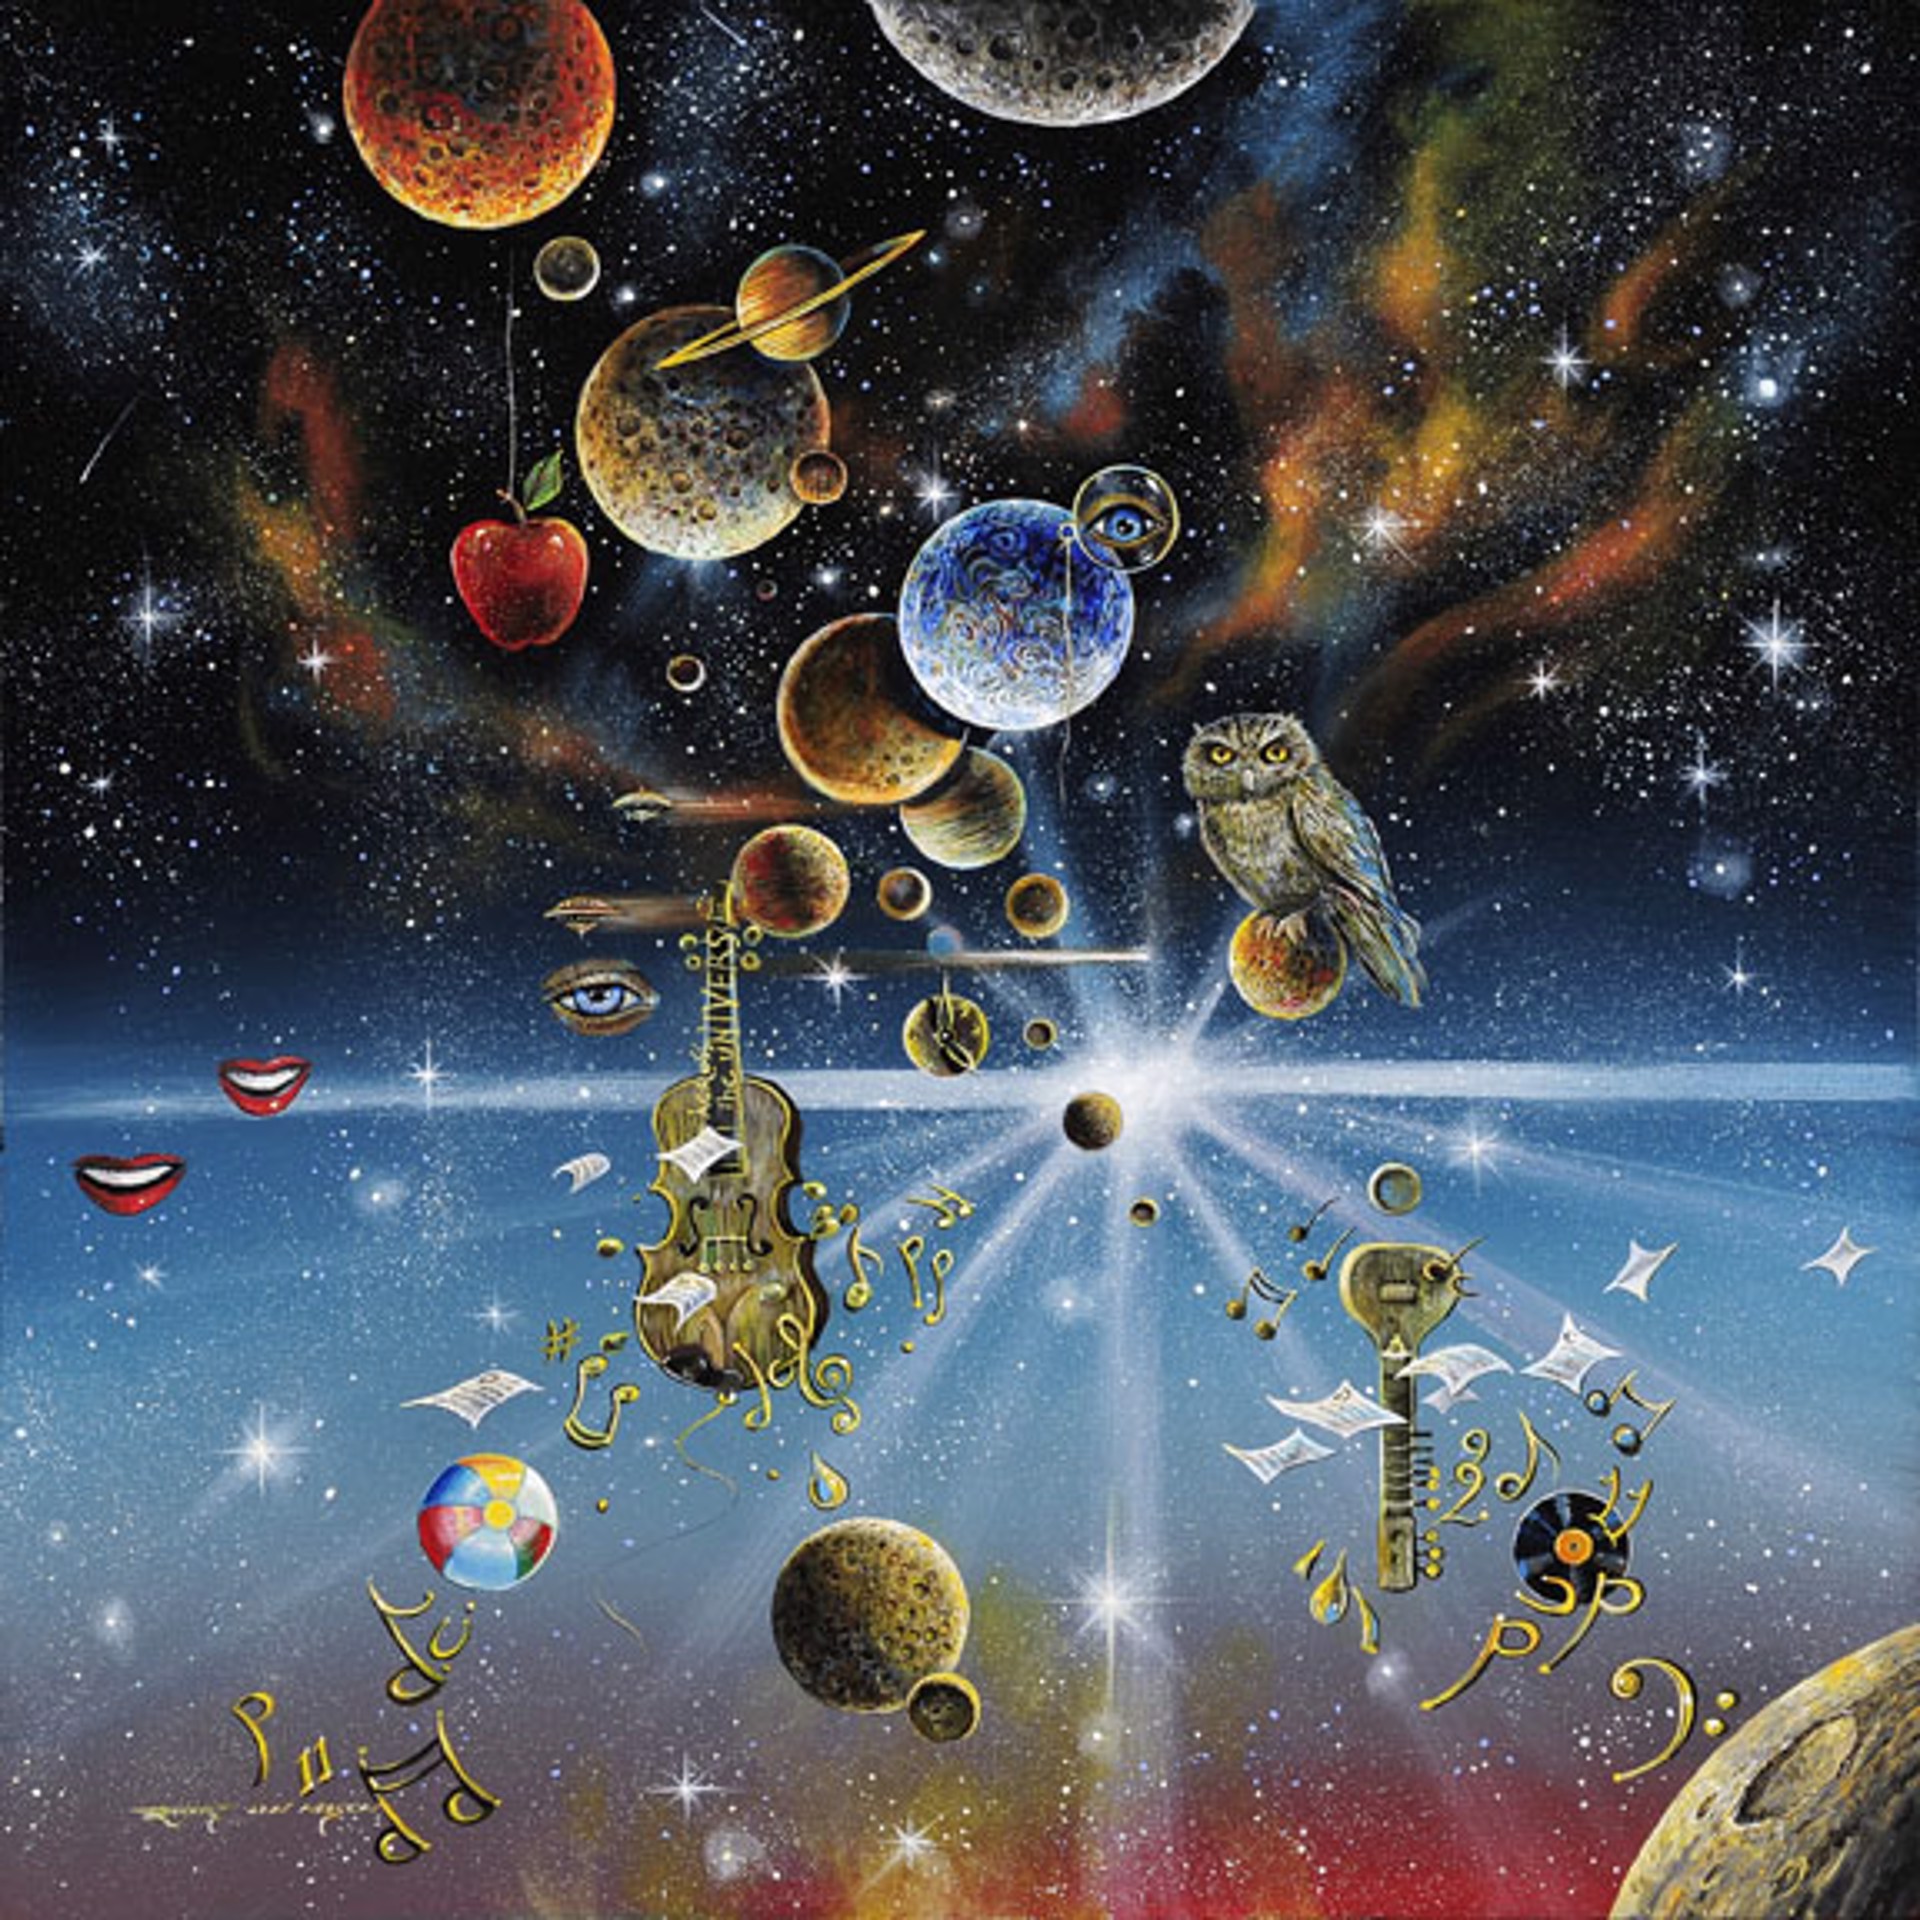 Across The Universe by Robert Lyn Nelson